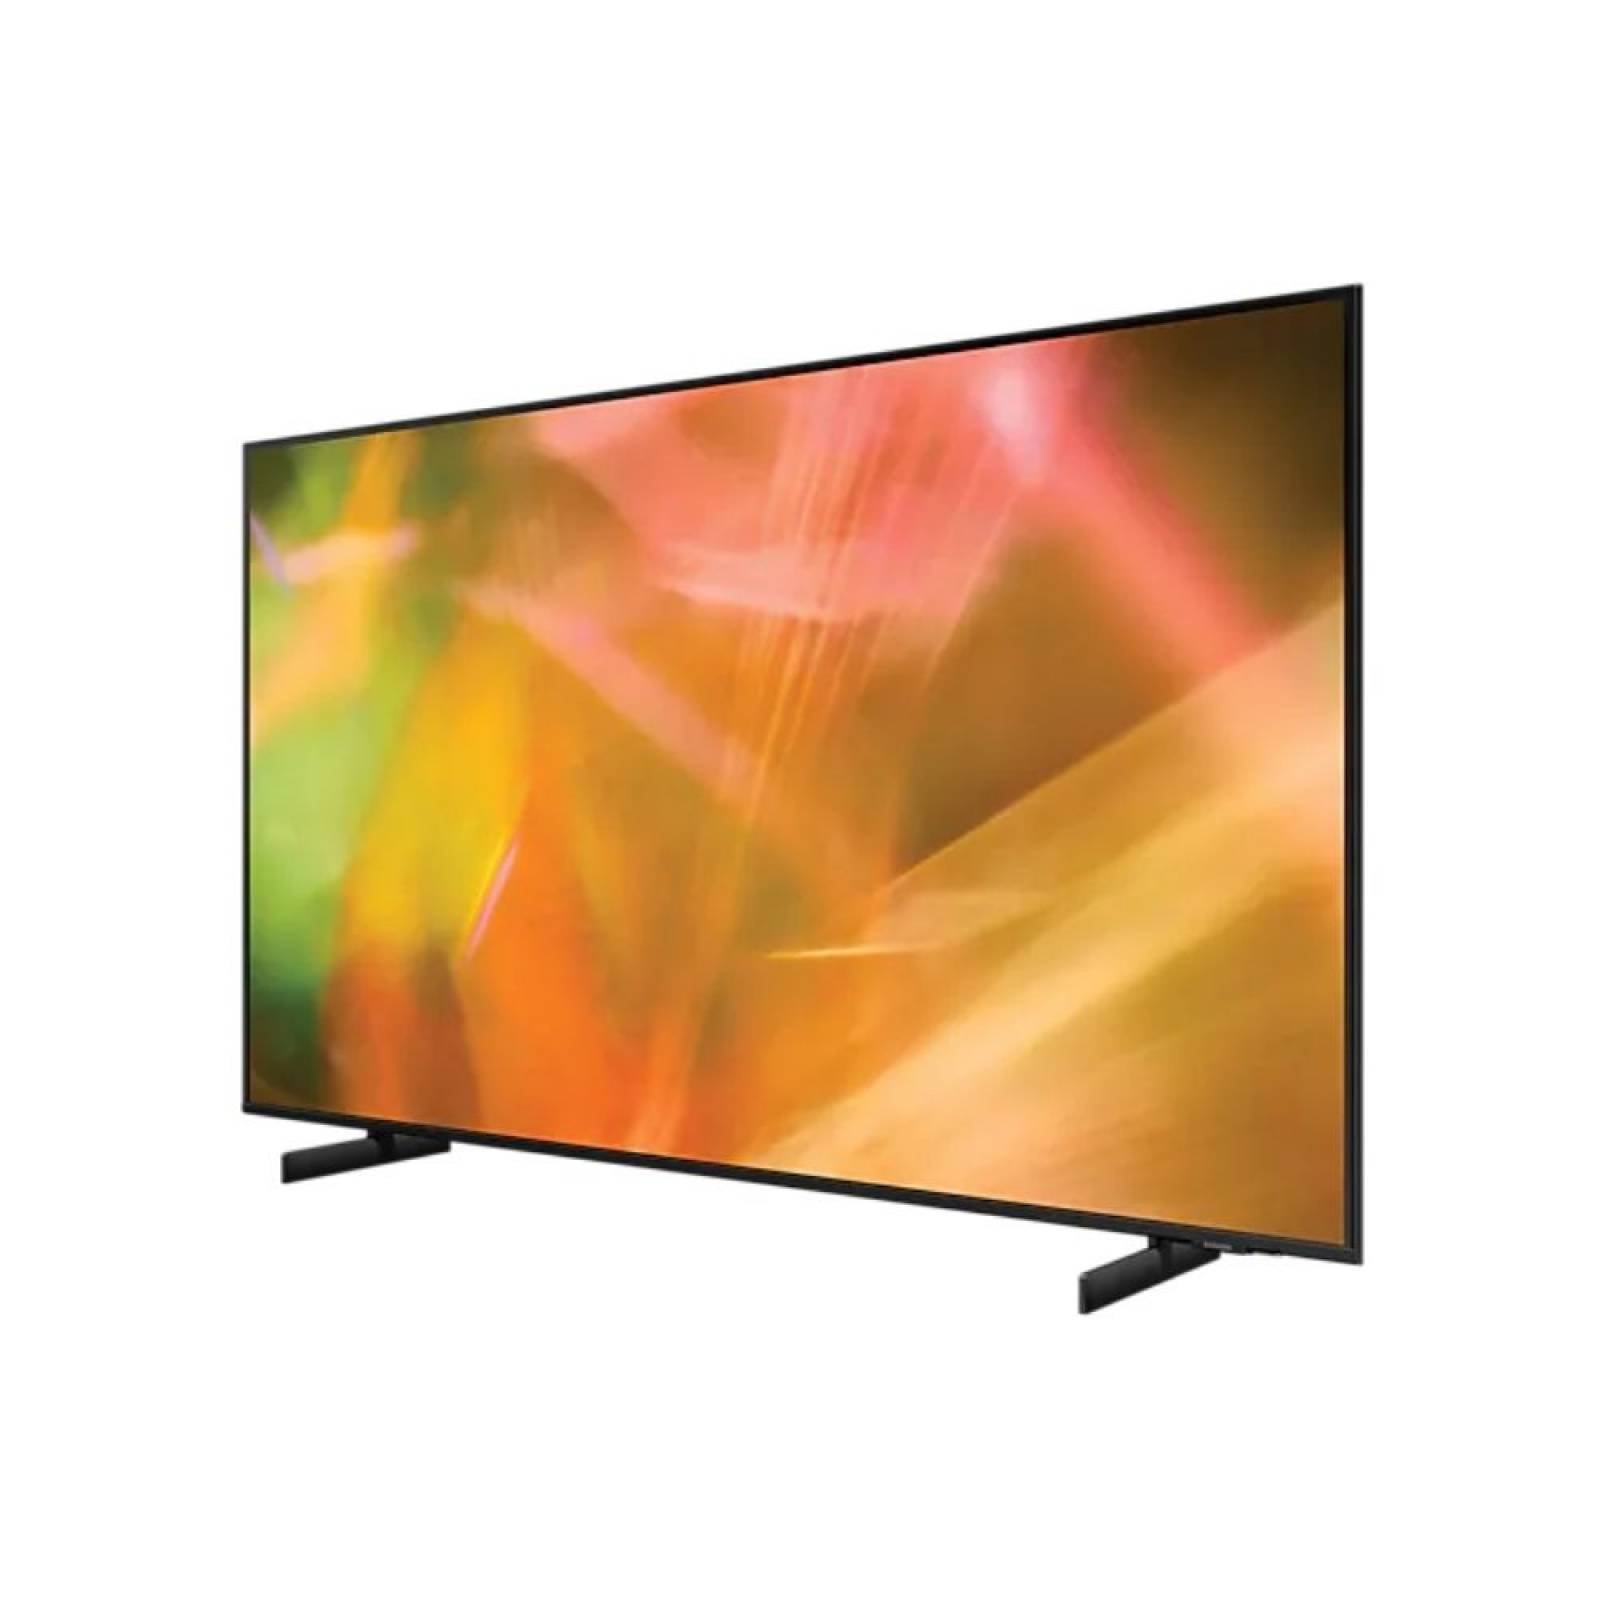 Samsung televisor un75au8000 smart led tv 4k crystal uhd de 75 pulgadas